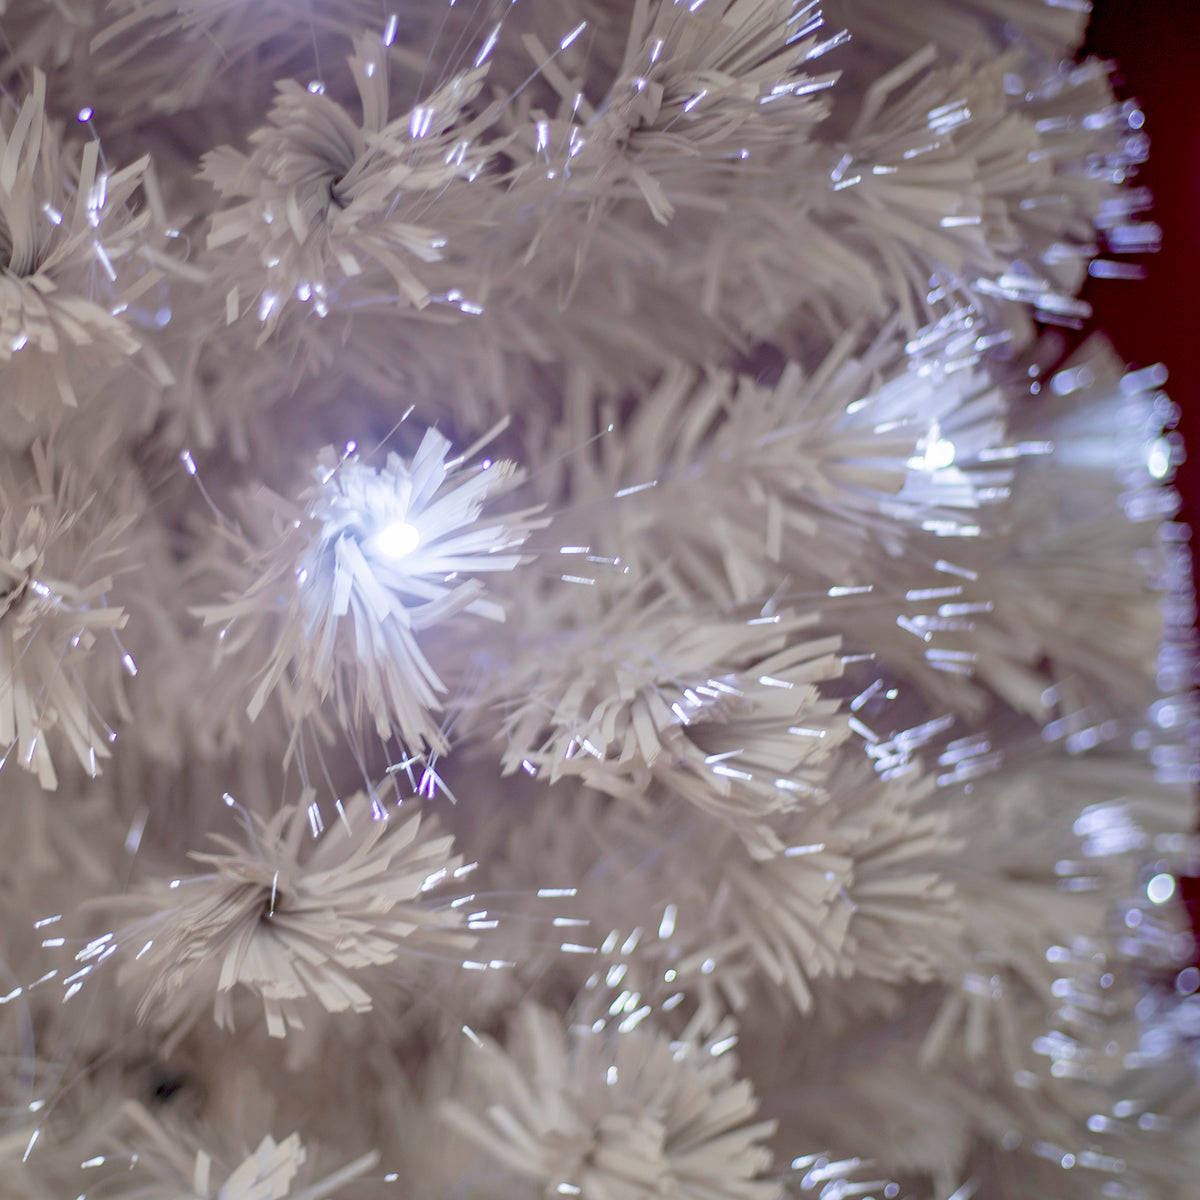 2ft - 7ft White Fibre Optic Christmas Tree with White Fibre Optics and LED Lights